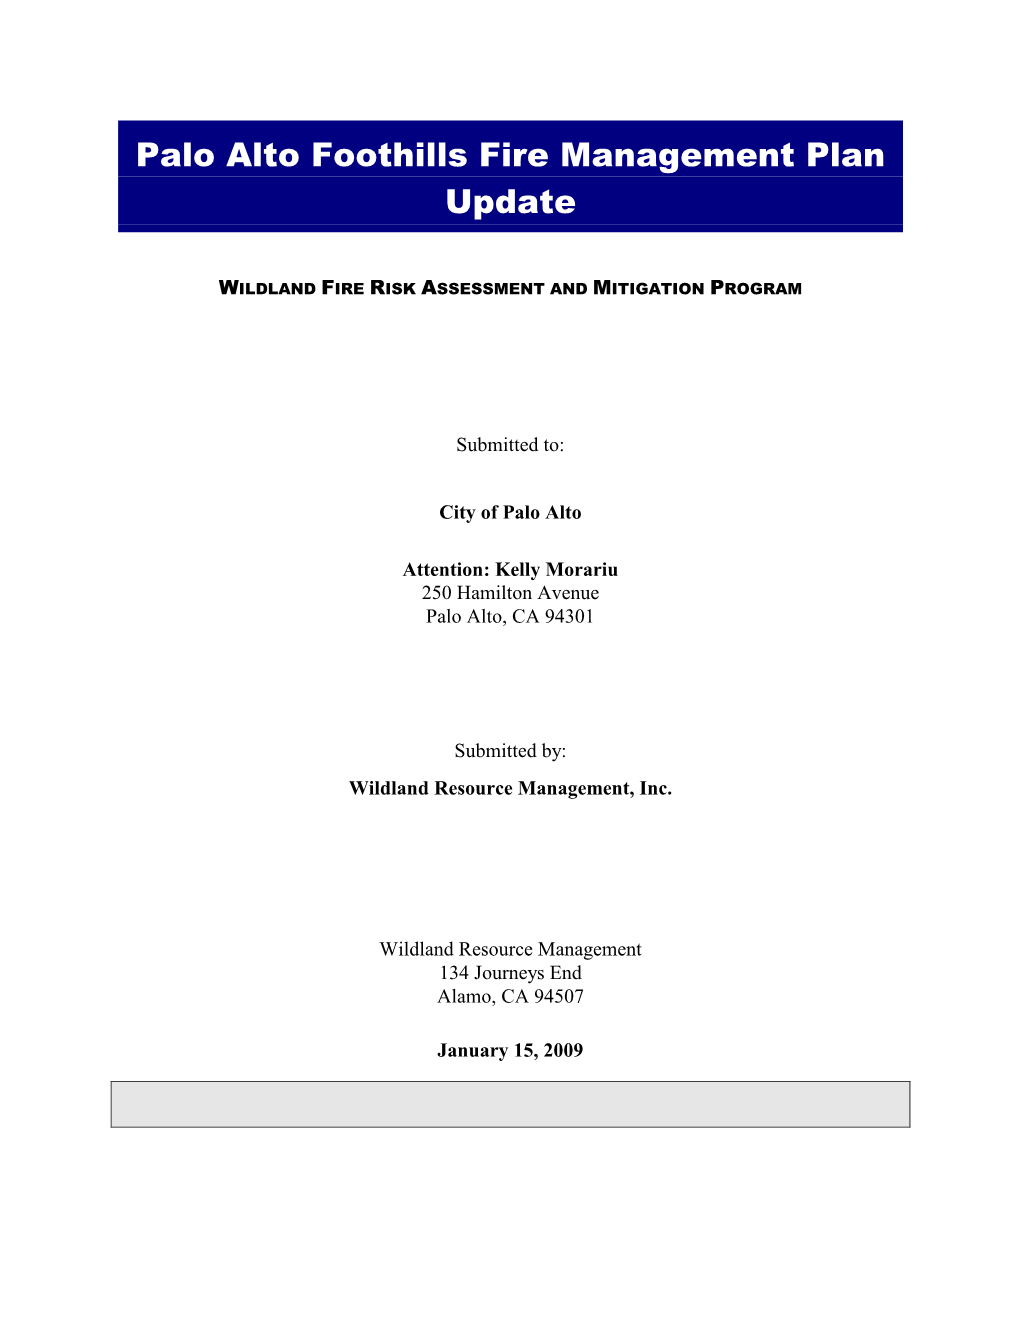 Palo Alto Foothills Fire Management Plan Update